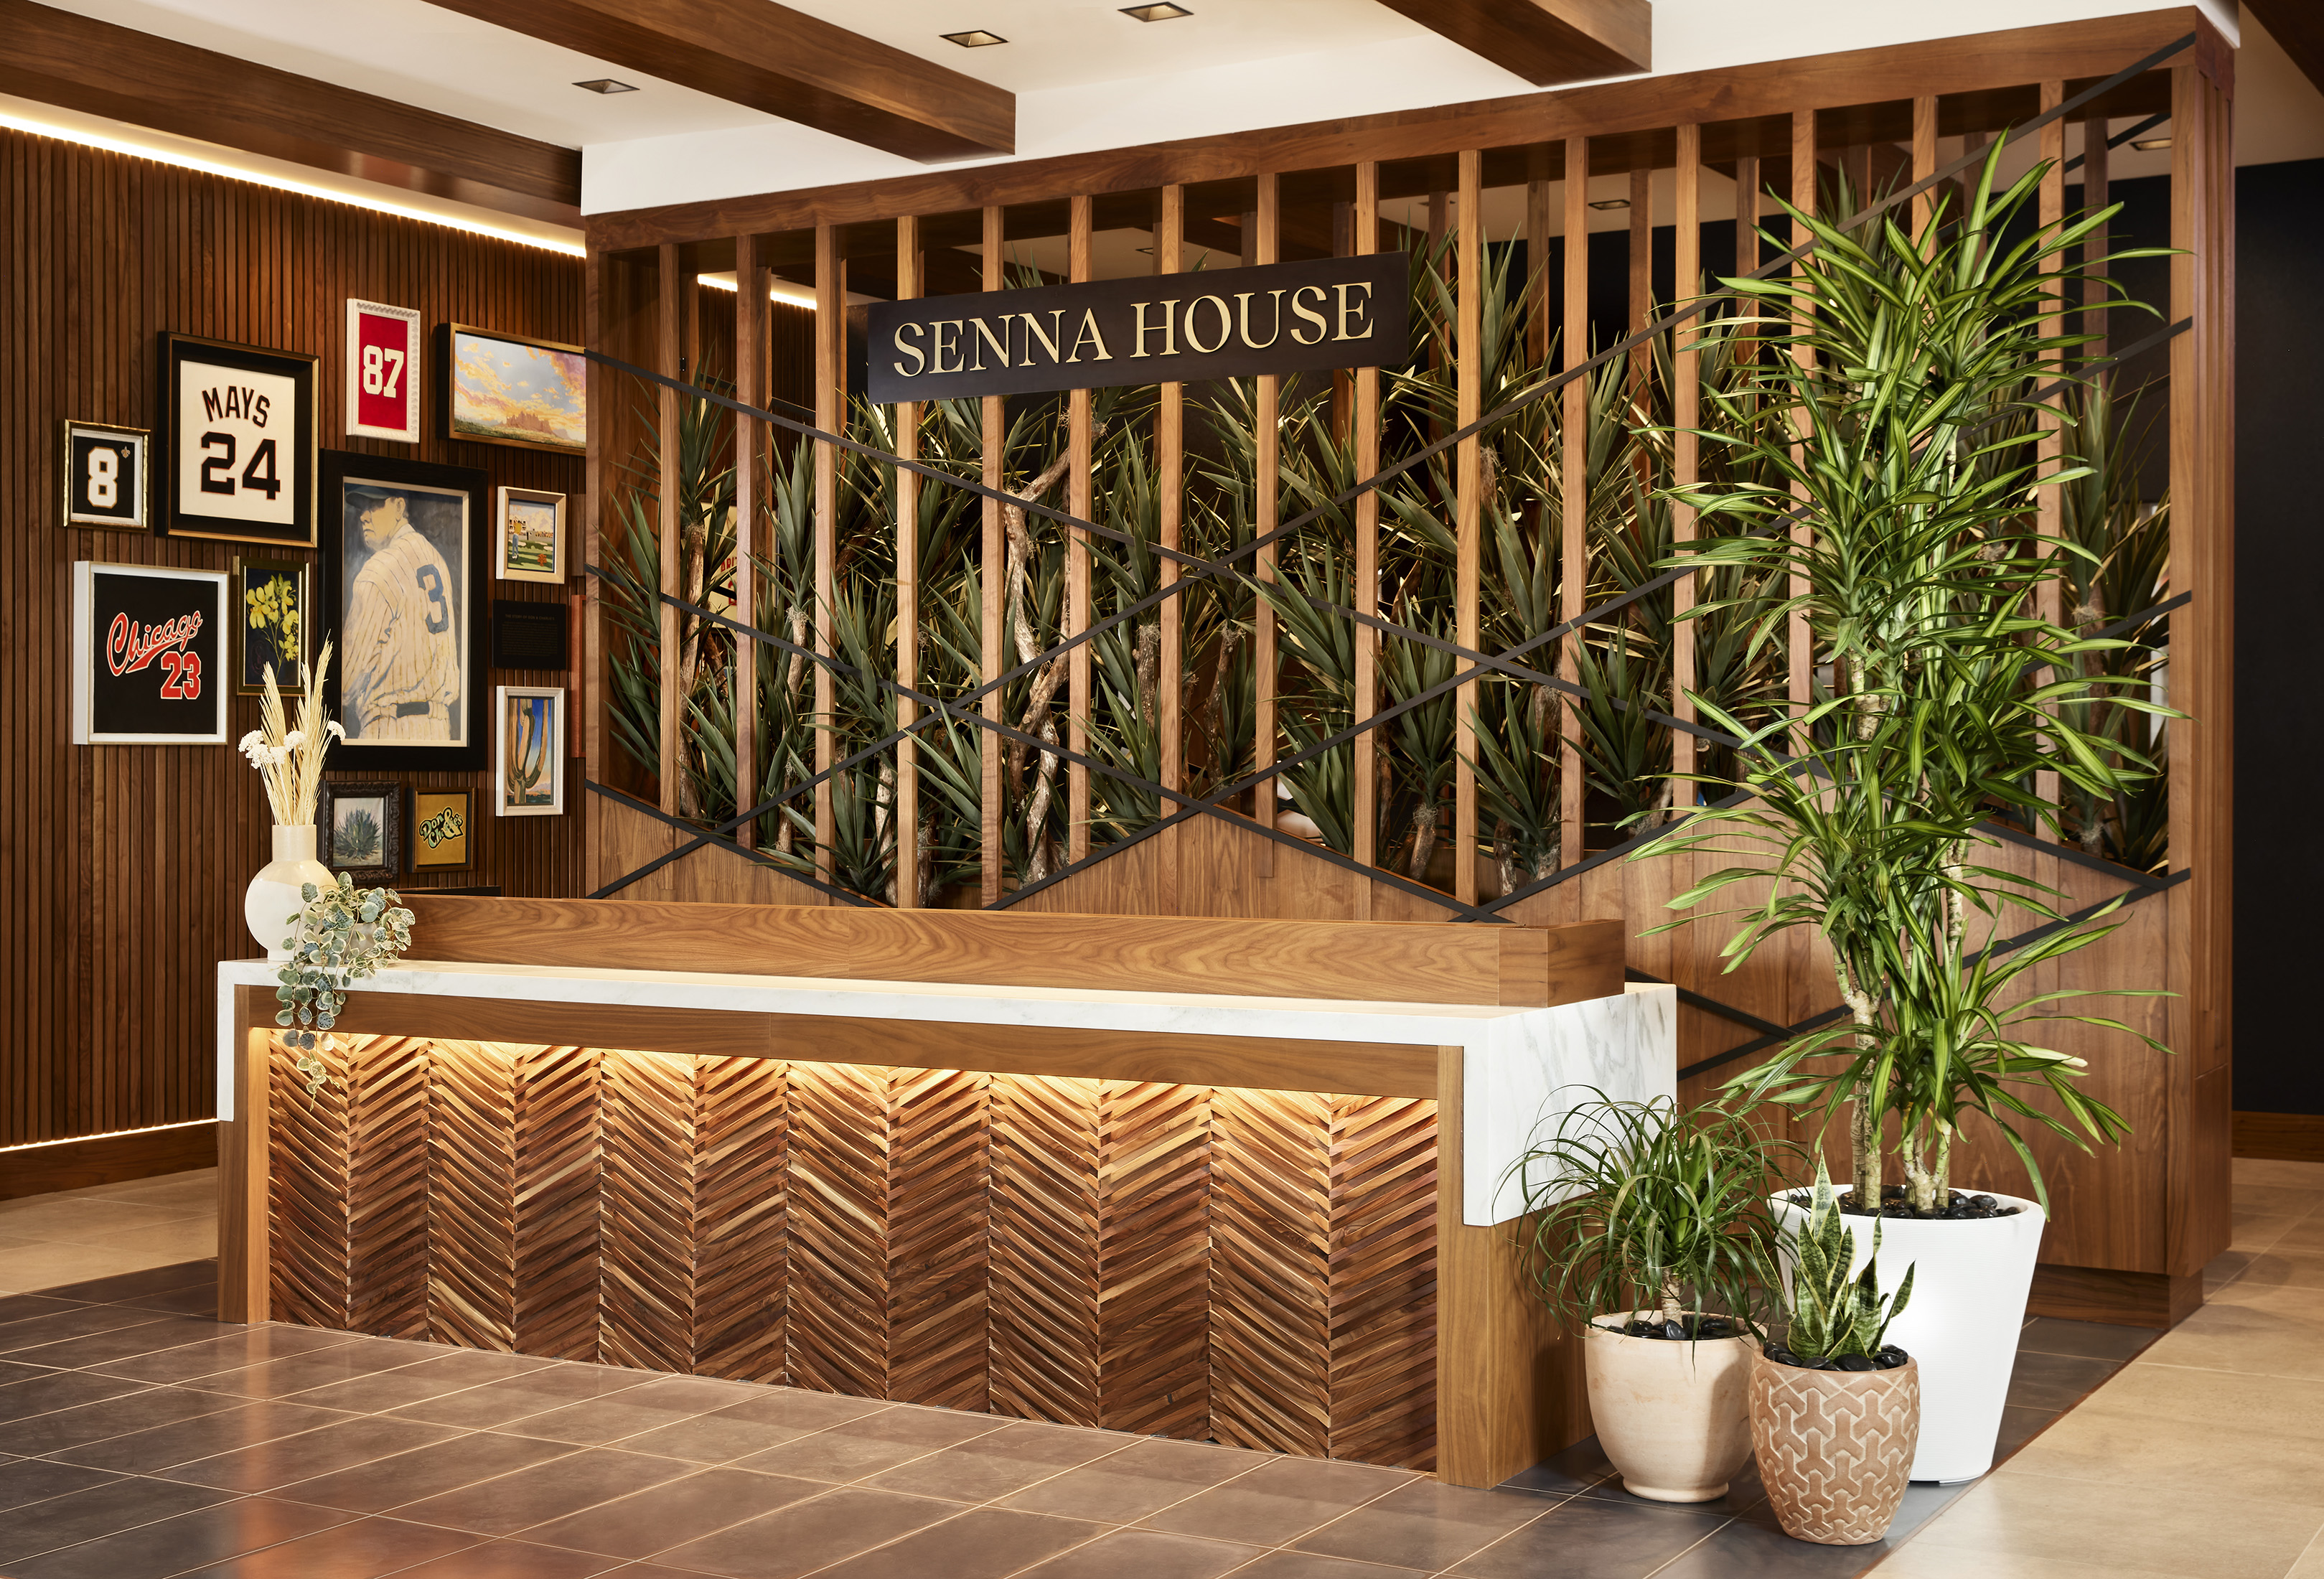 Senna House Scottsdale, Curio Collection by Hilton - Stephen Denton Photography, Los Angeles, California based interior & hospitality photographer